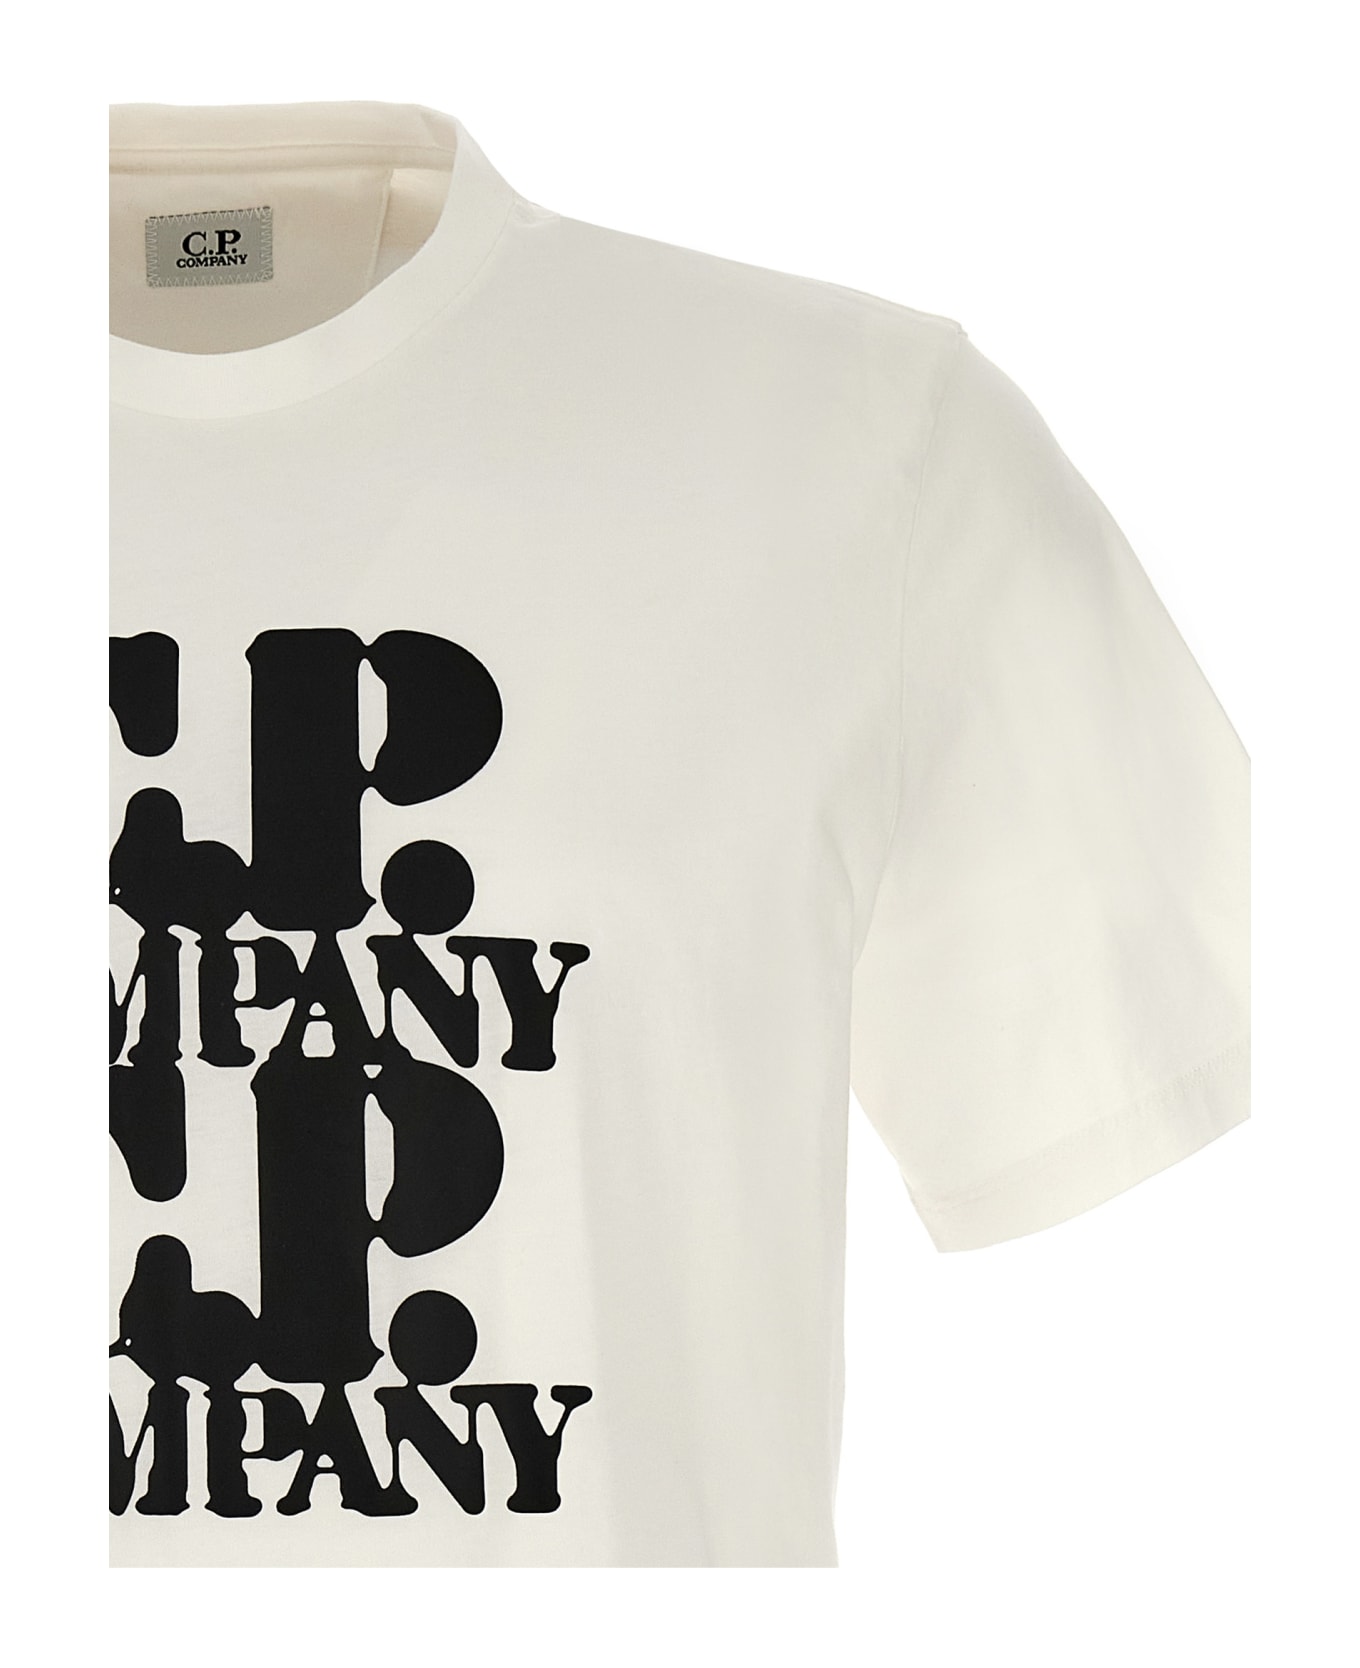 C.P. Company 'graphic' T-shirt - Gauze white